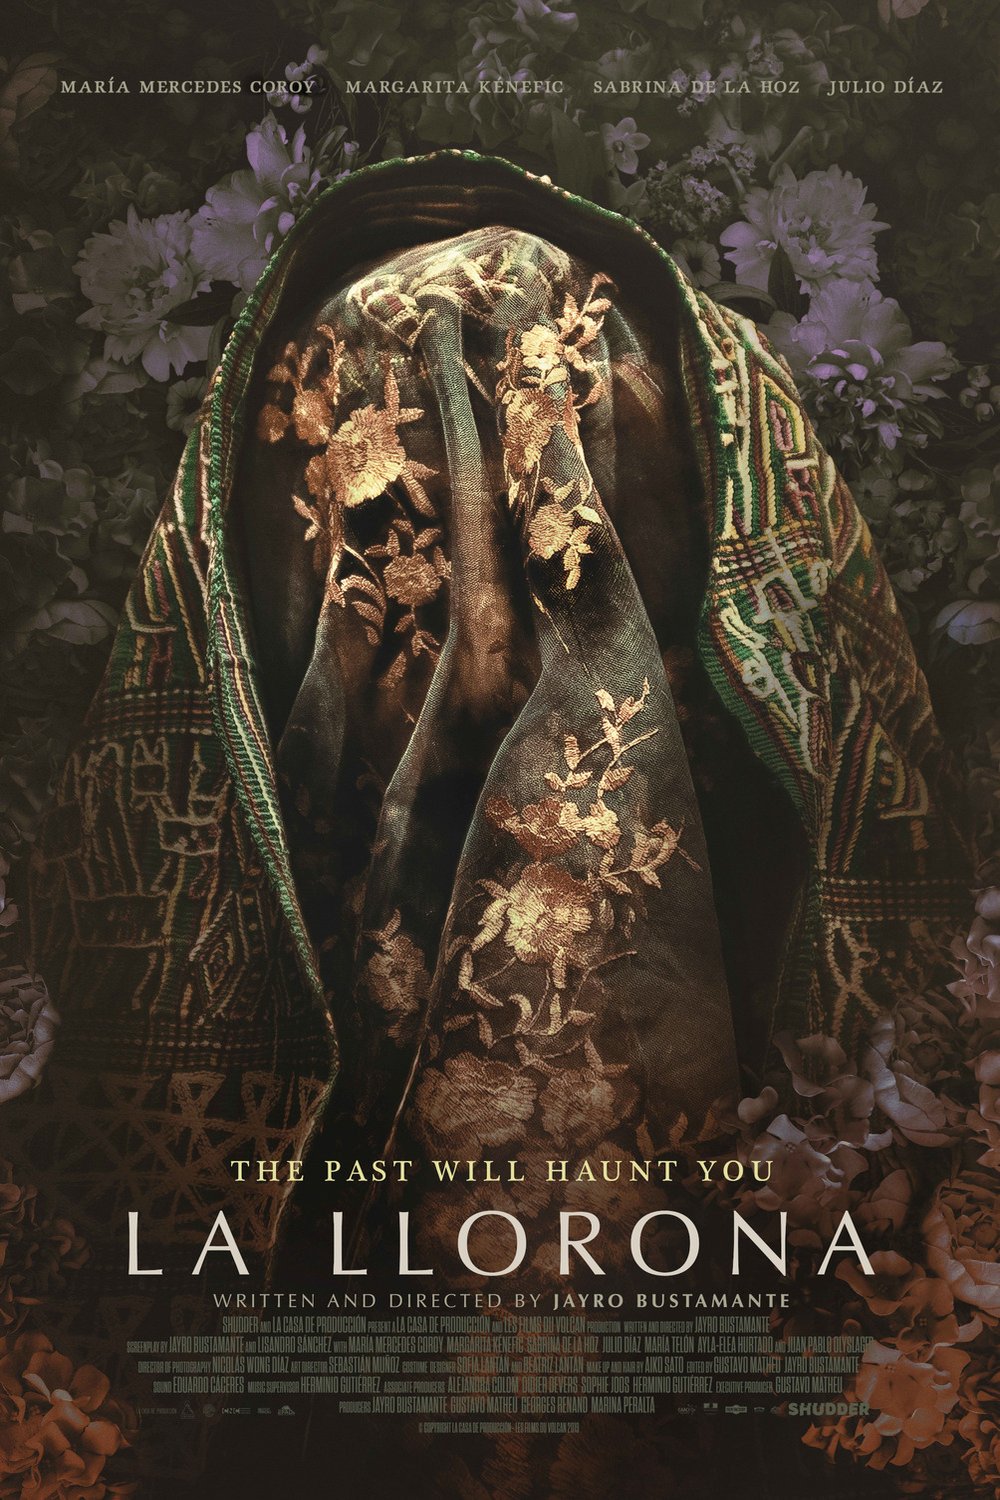 Spanish poster of the movie La llorona